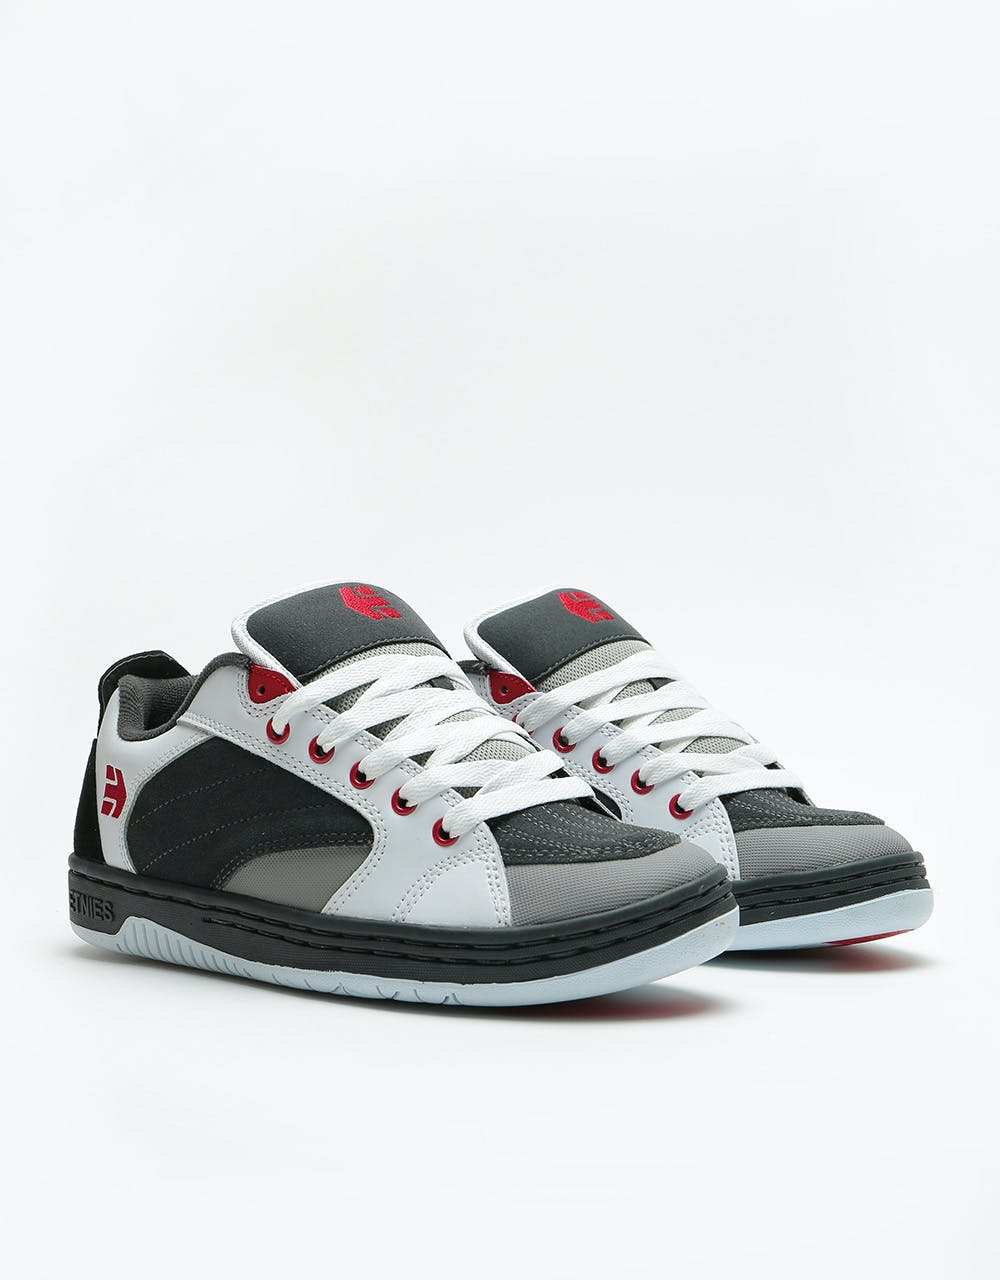 Etnies Czar Skate Shoes - Grey/White/Red